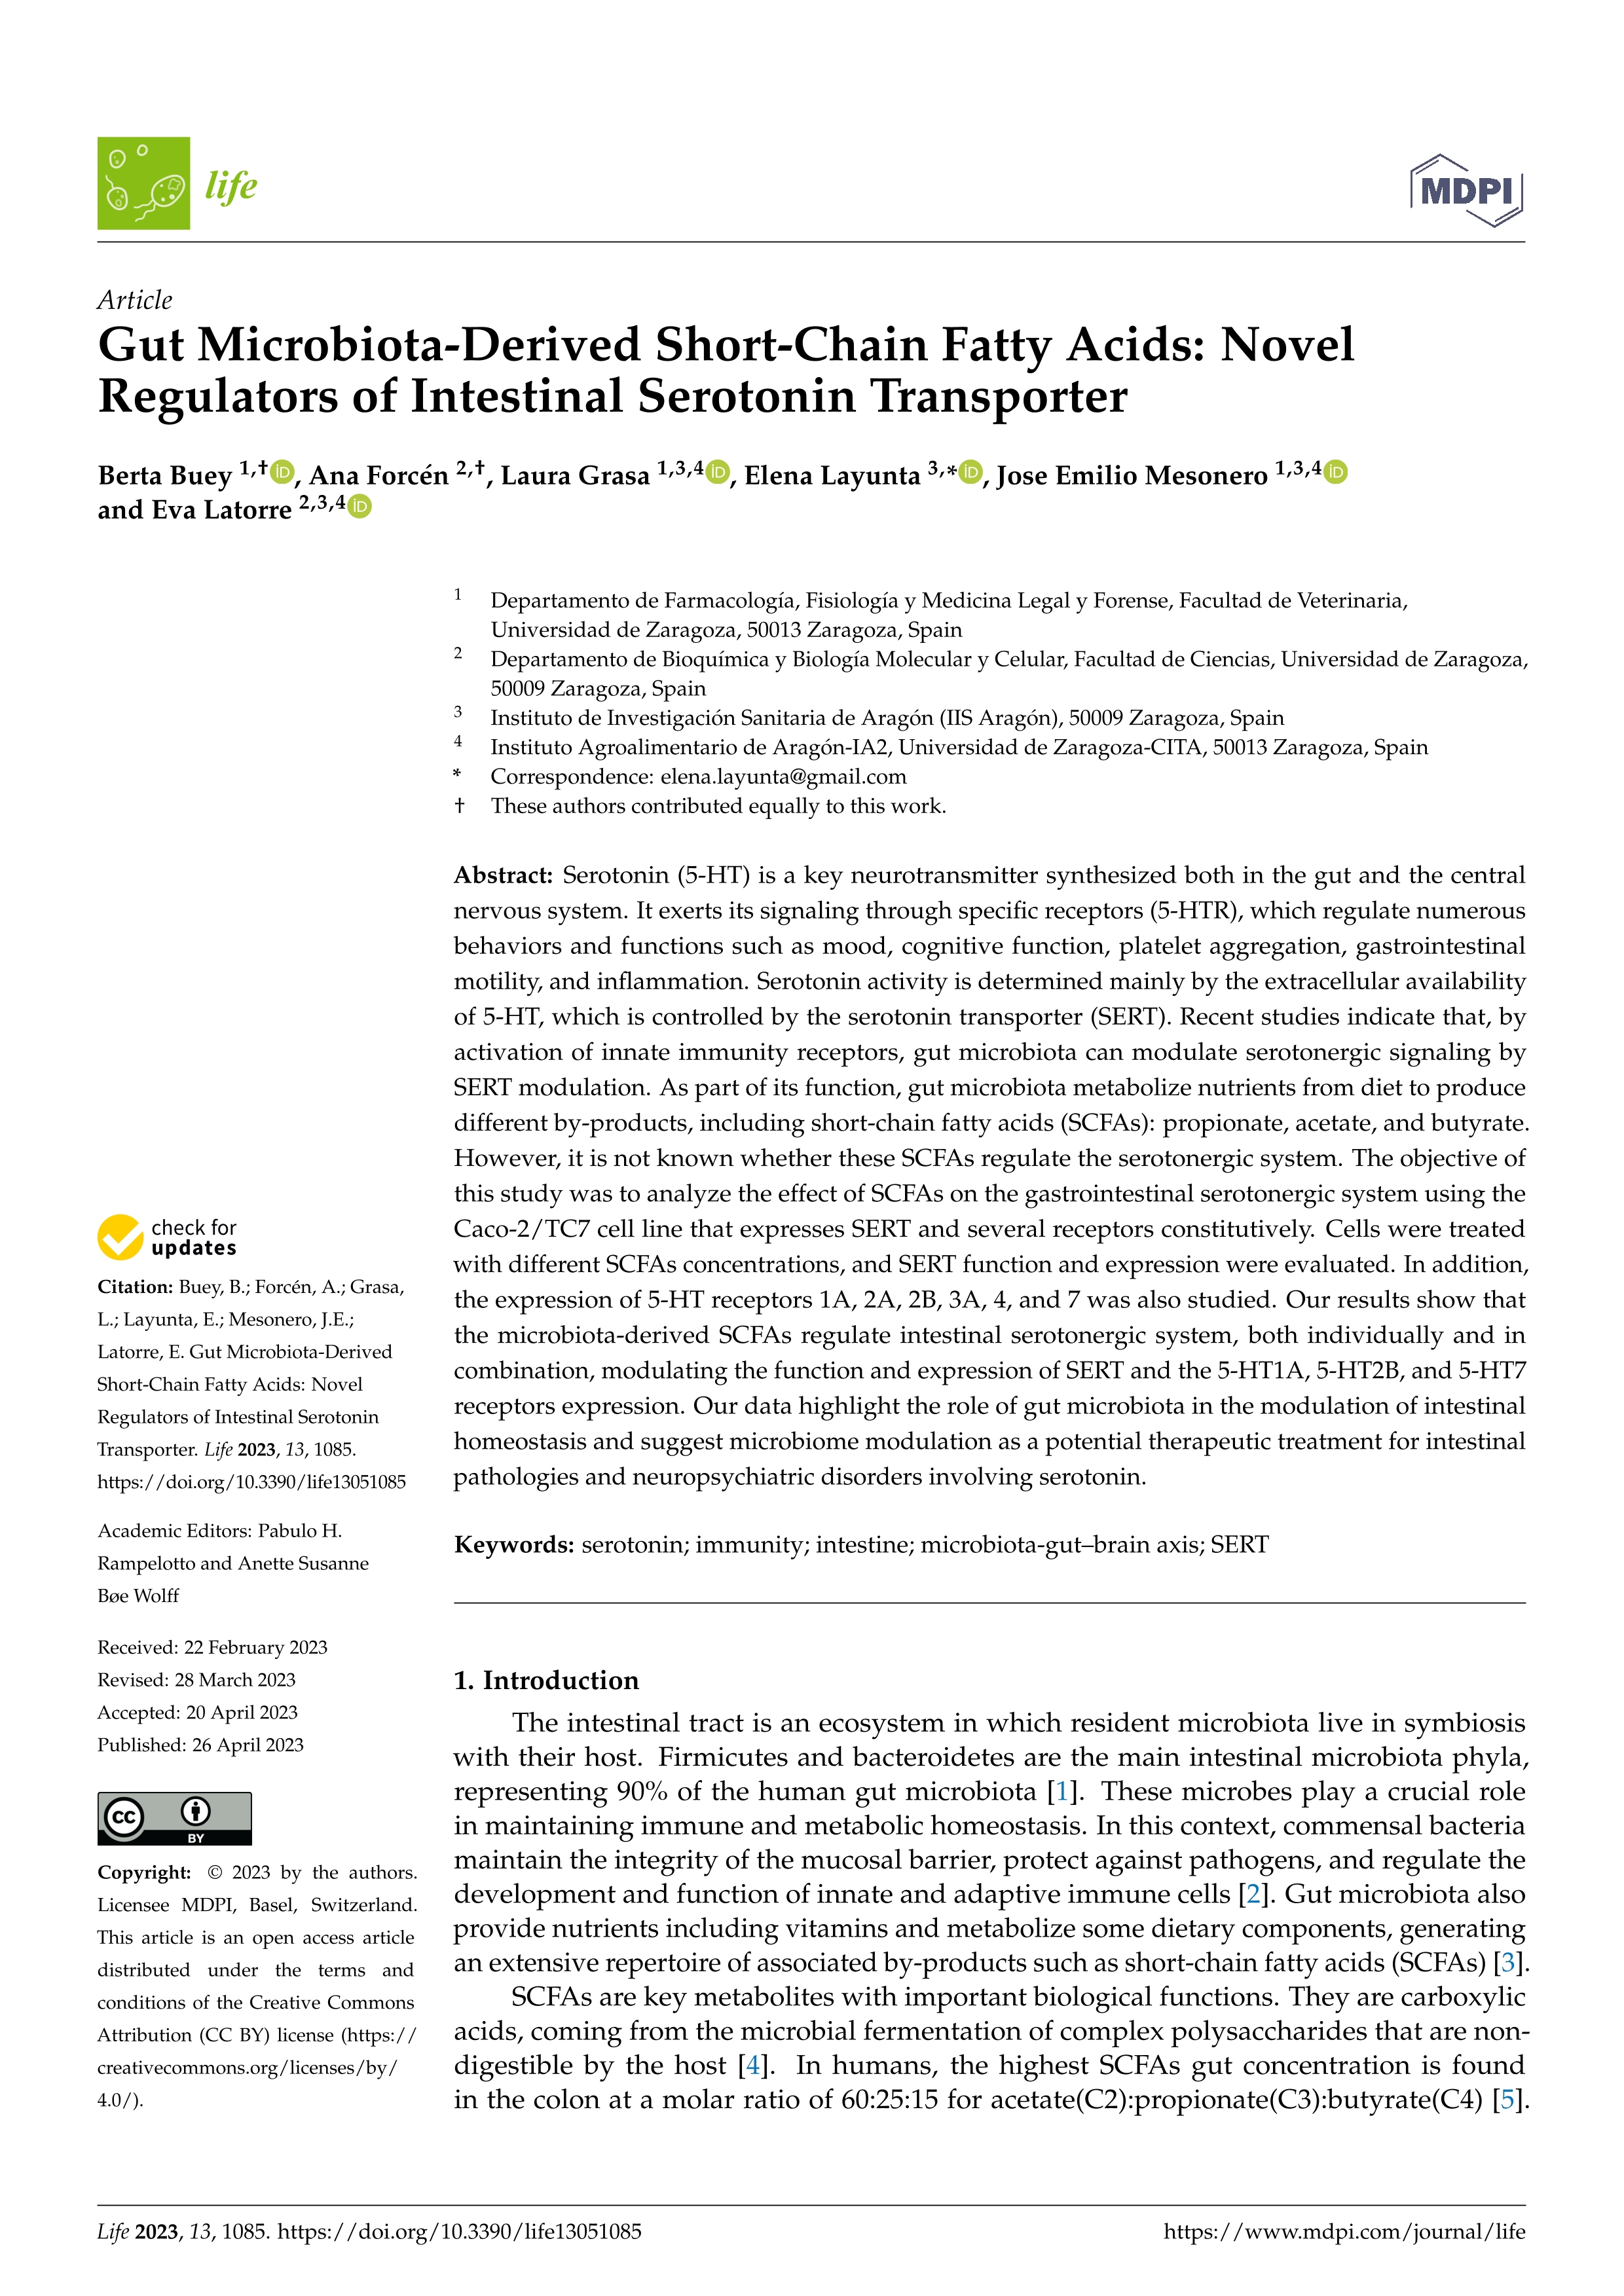 Gut microbiota-derived short-chain fatty acids: novel regulators of intestinal serotonin transporter